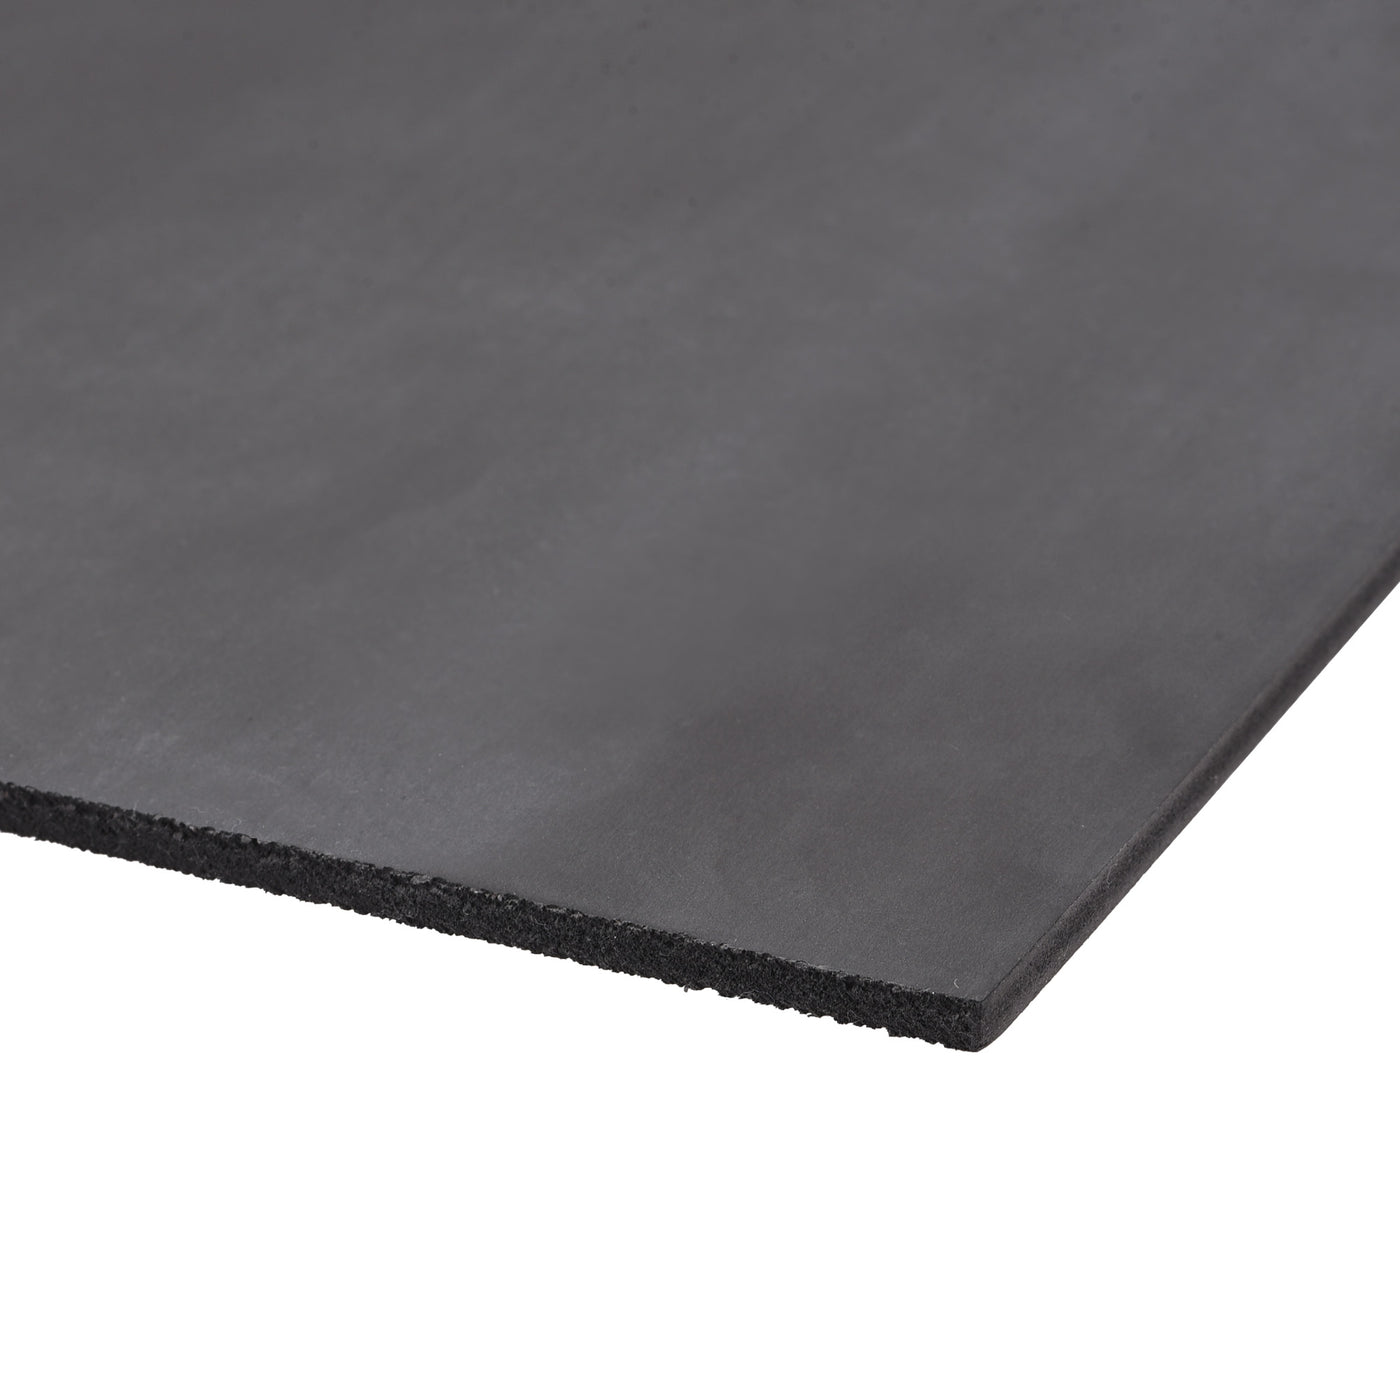 uxcell Uxcell PVC Foam Board Sheet,4.5mm x 300mm x 600mm,Black,Double Sided,2pcs